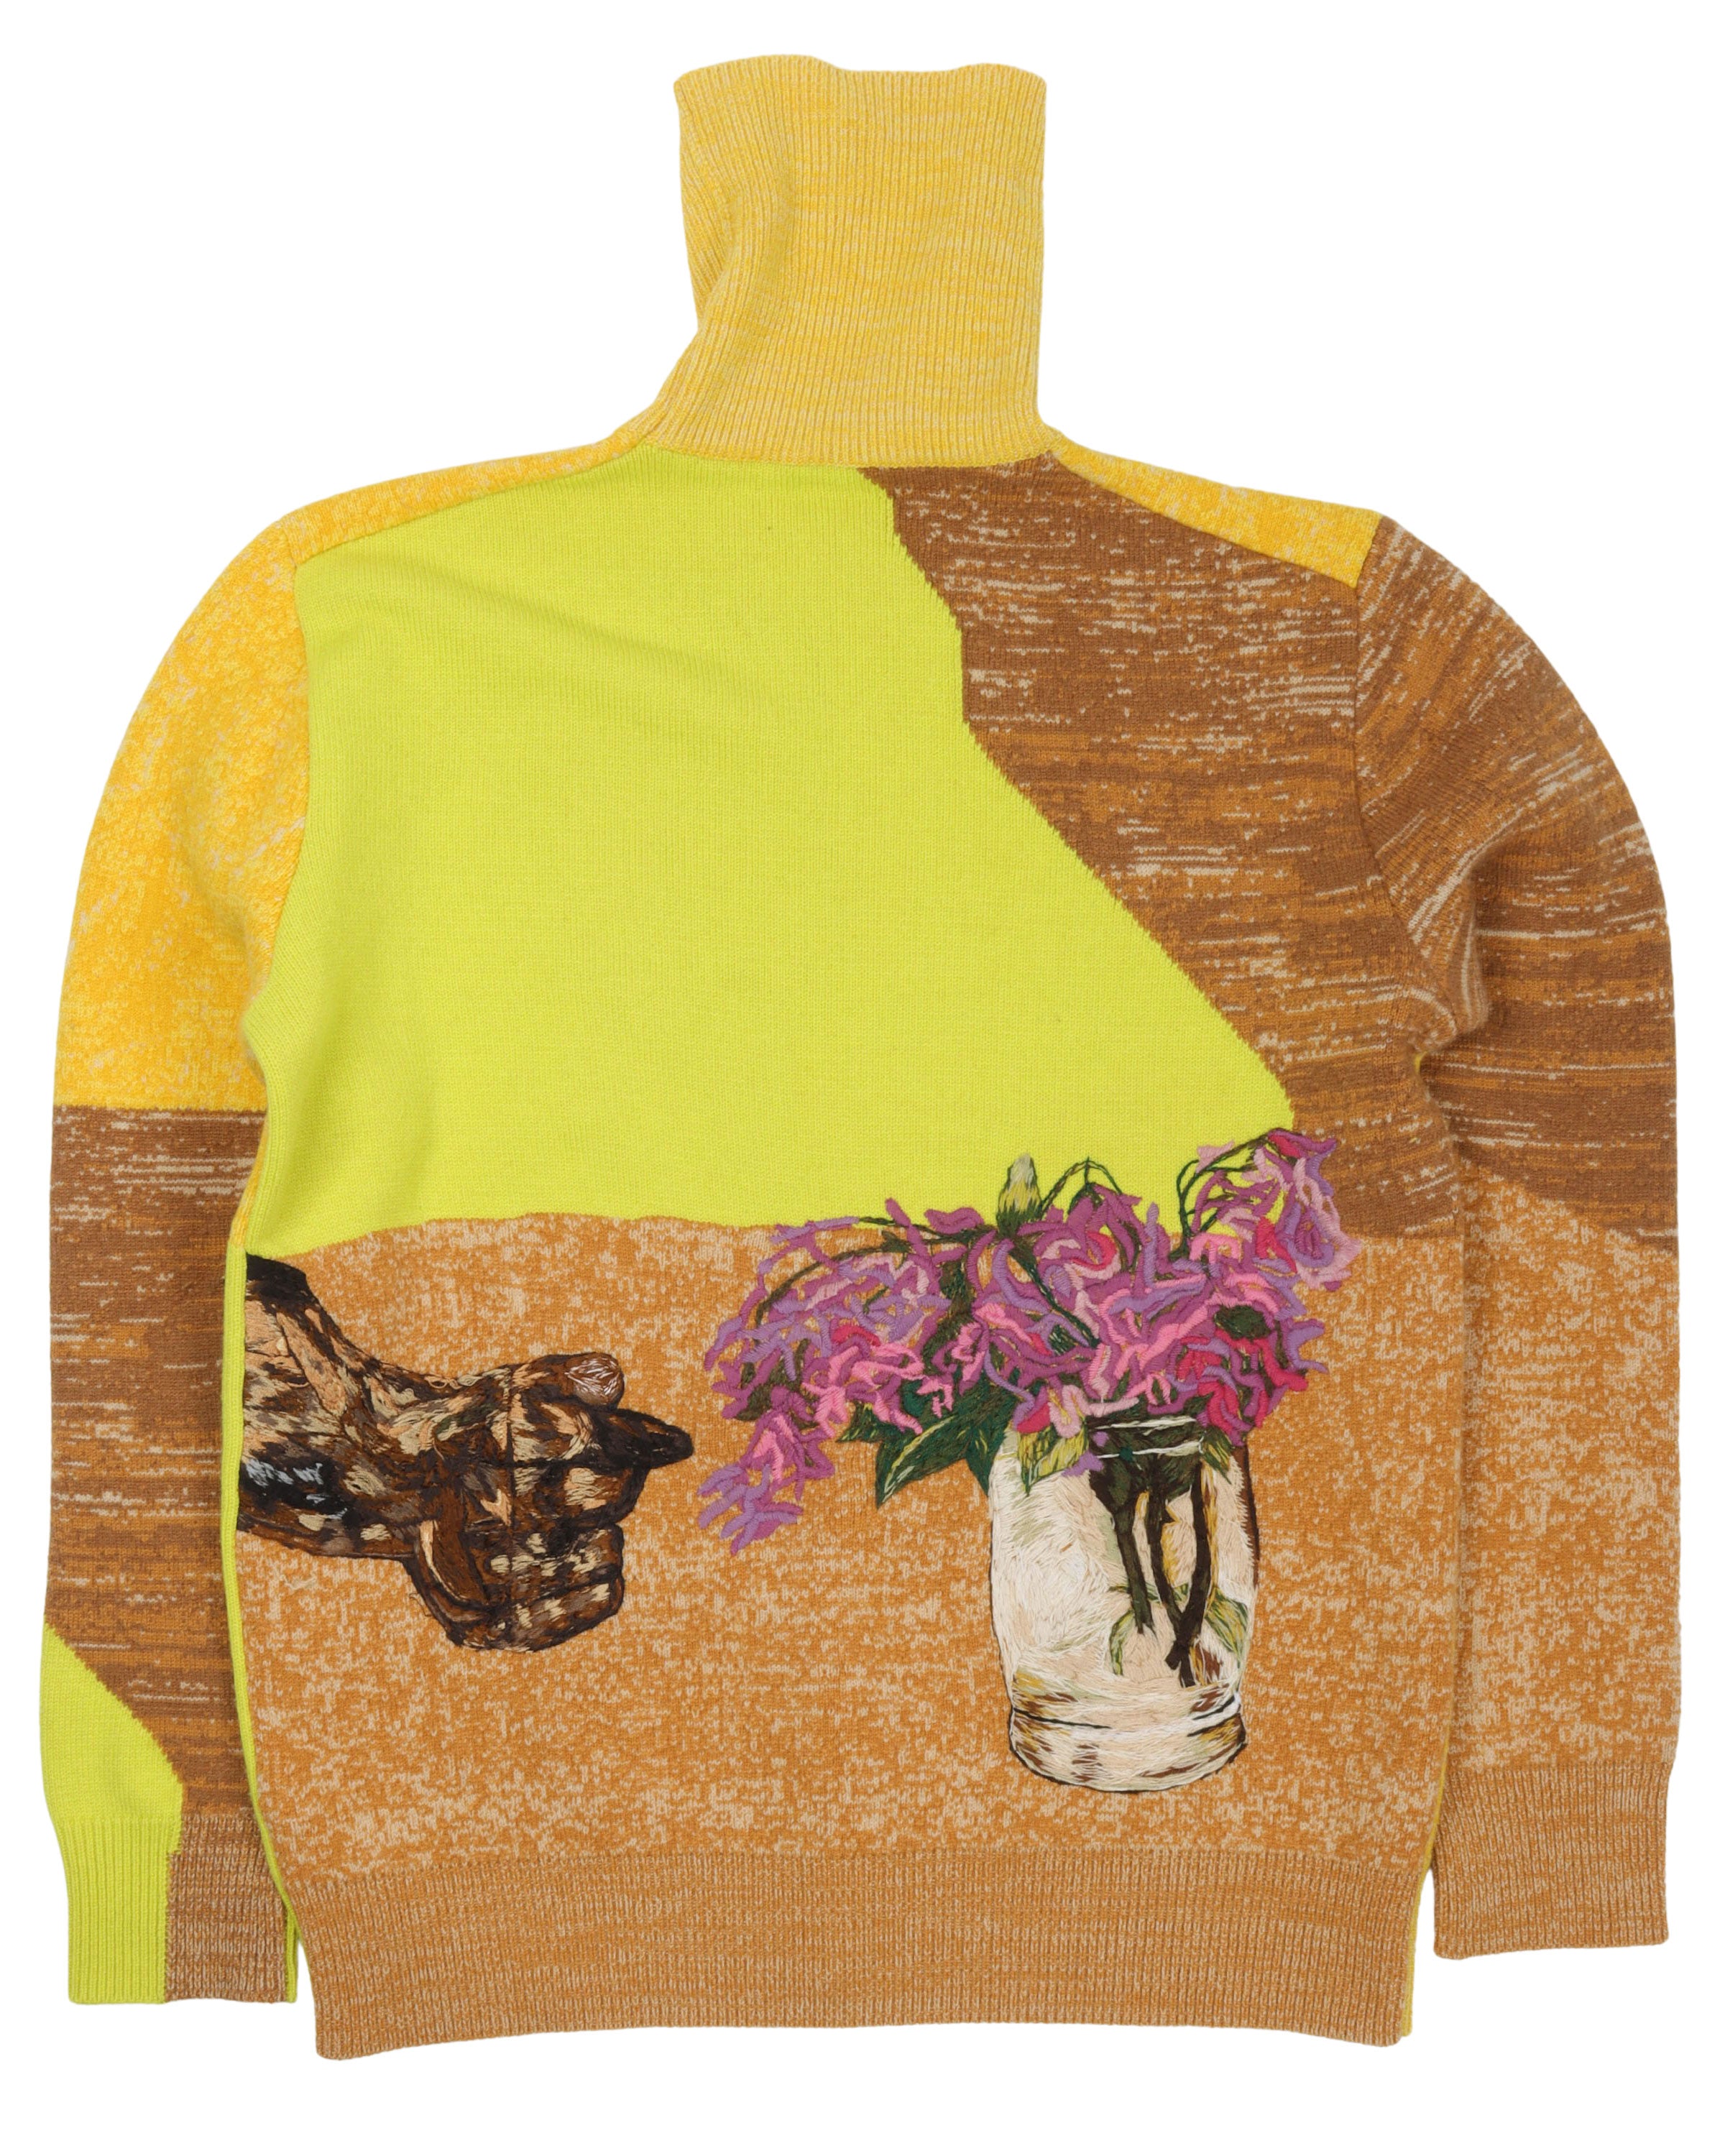 Amoako Boafo Embroidered Sweater